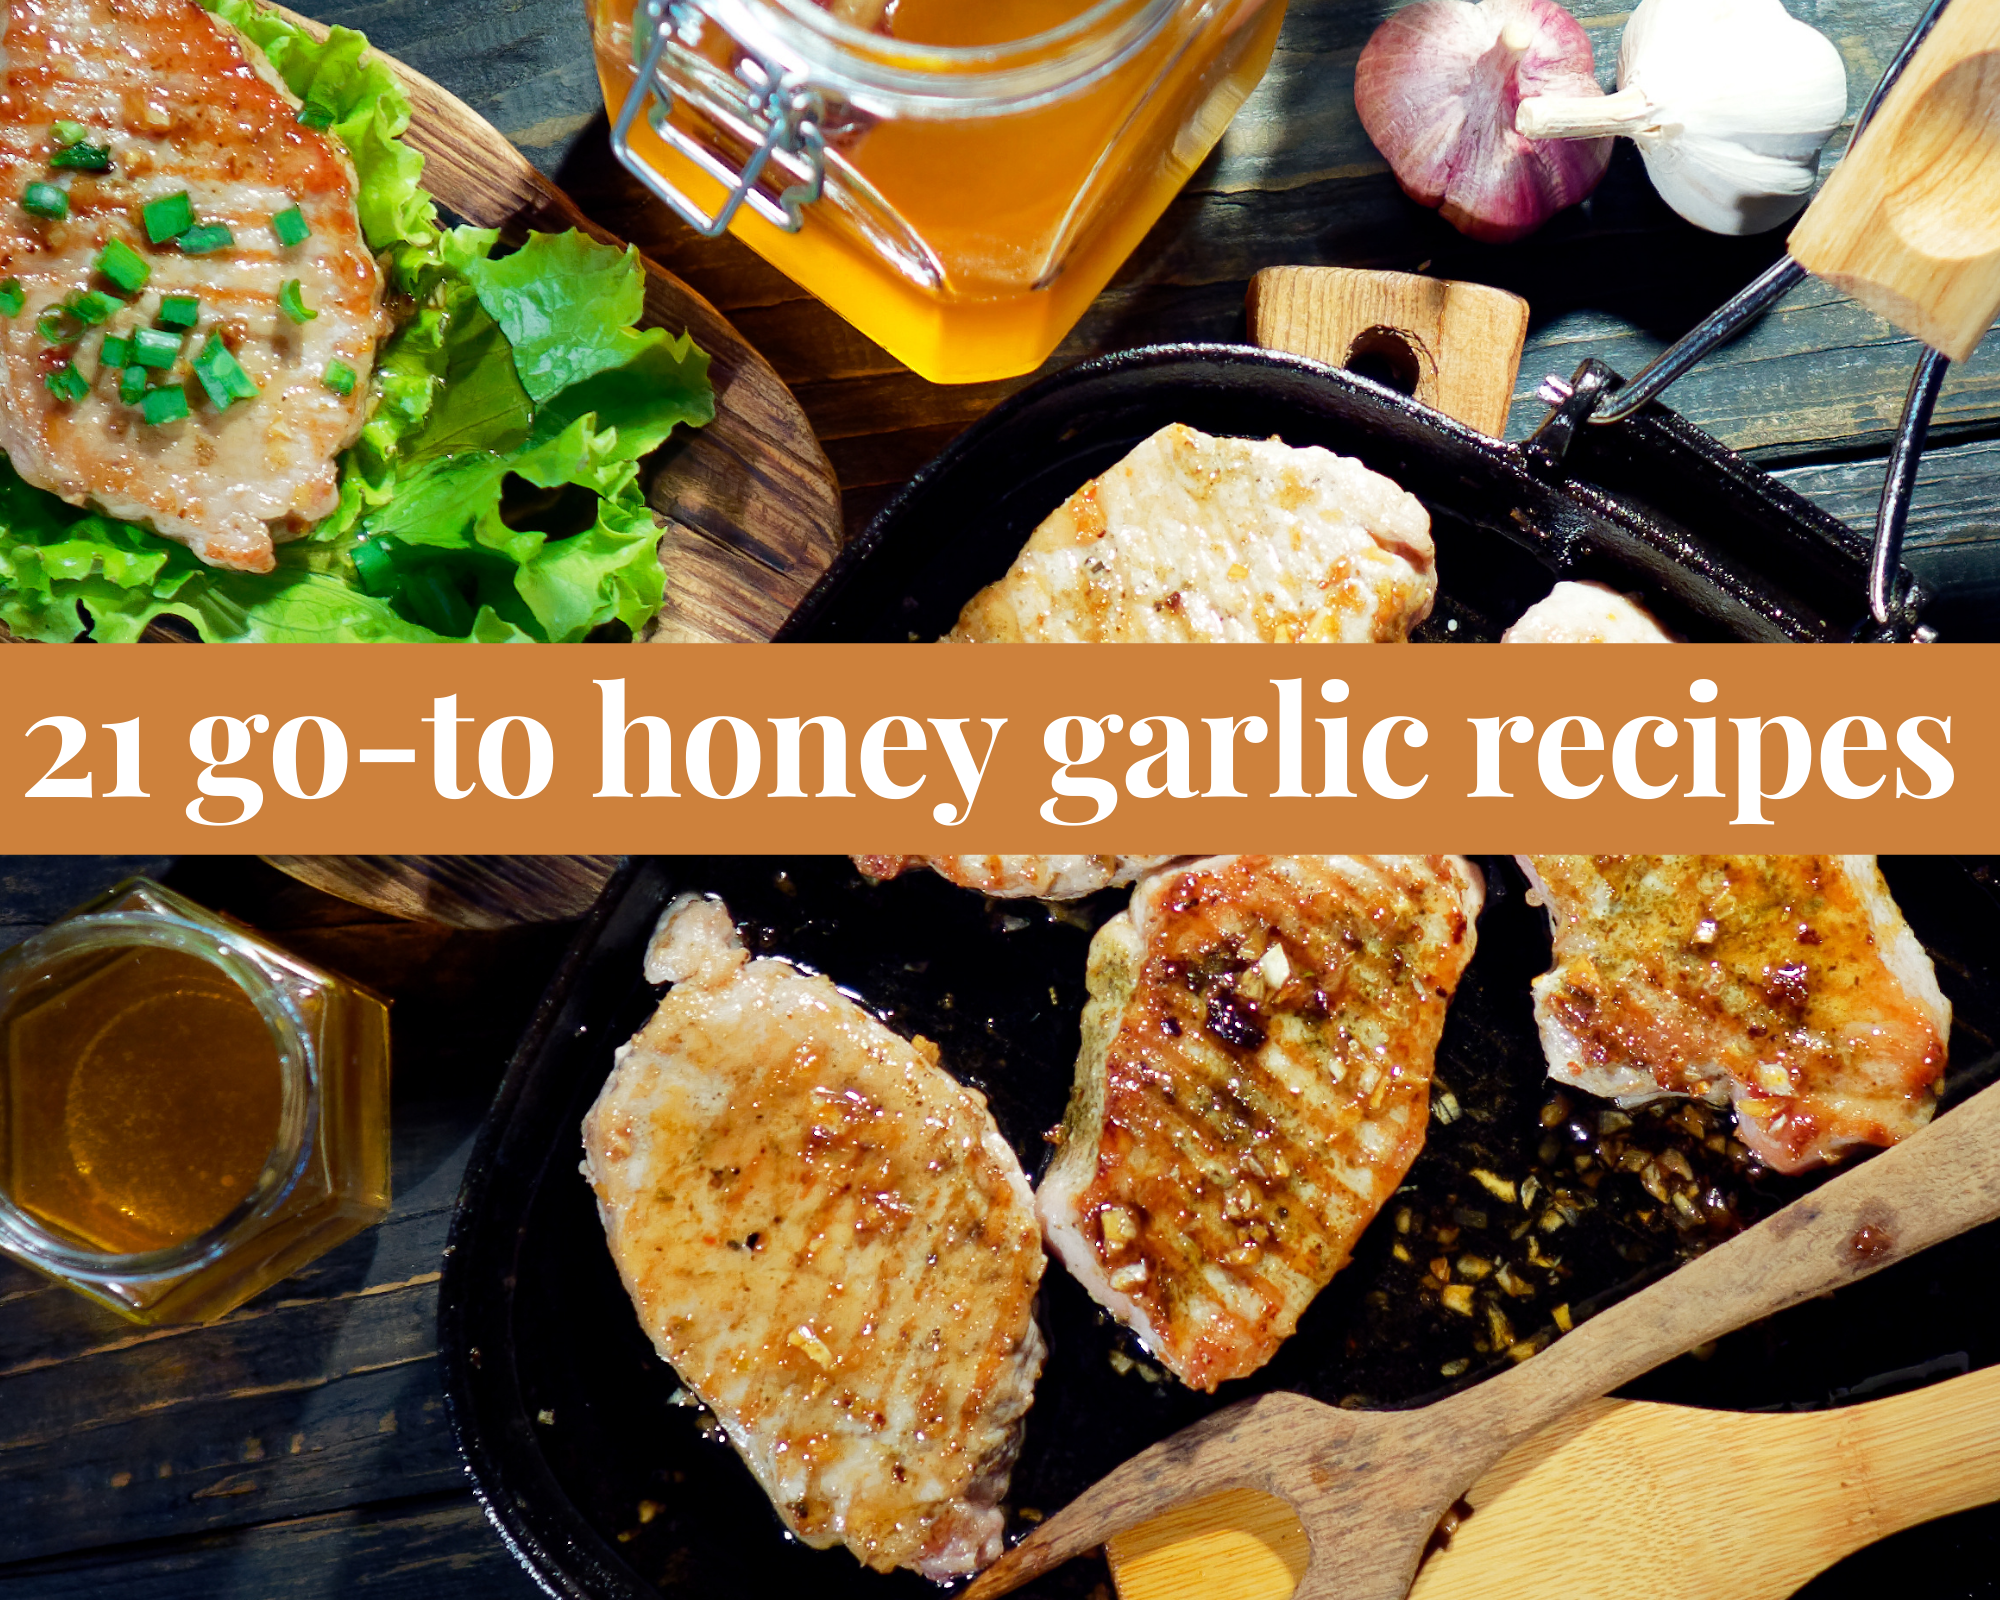 Honey garlic recipes